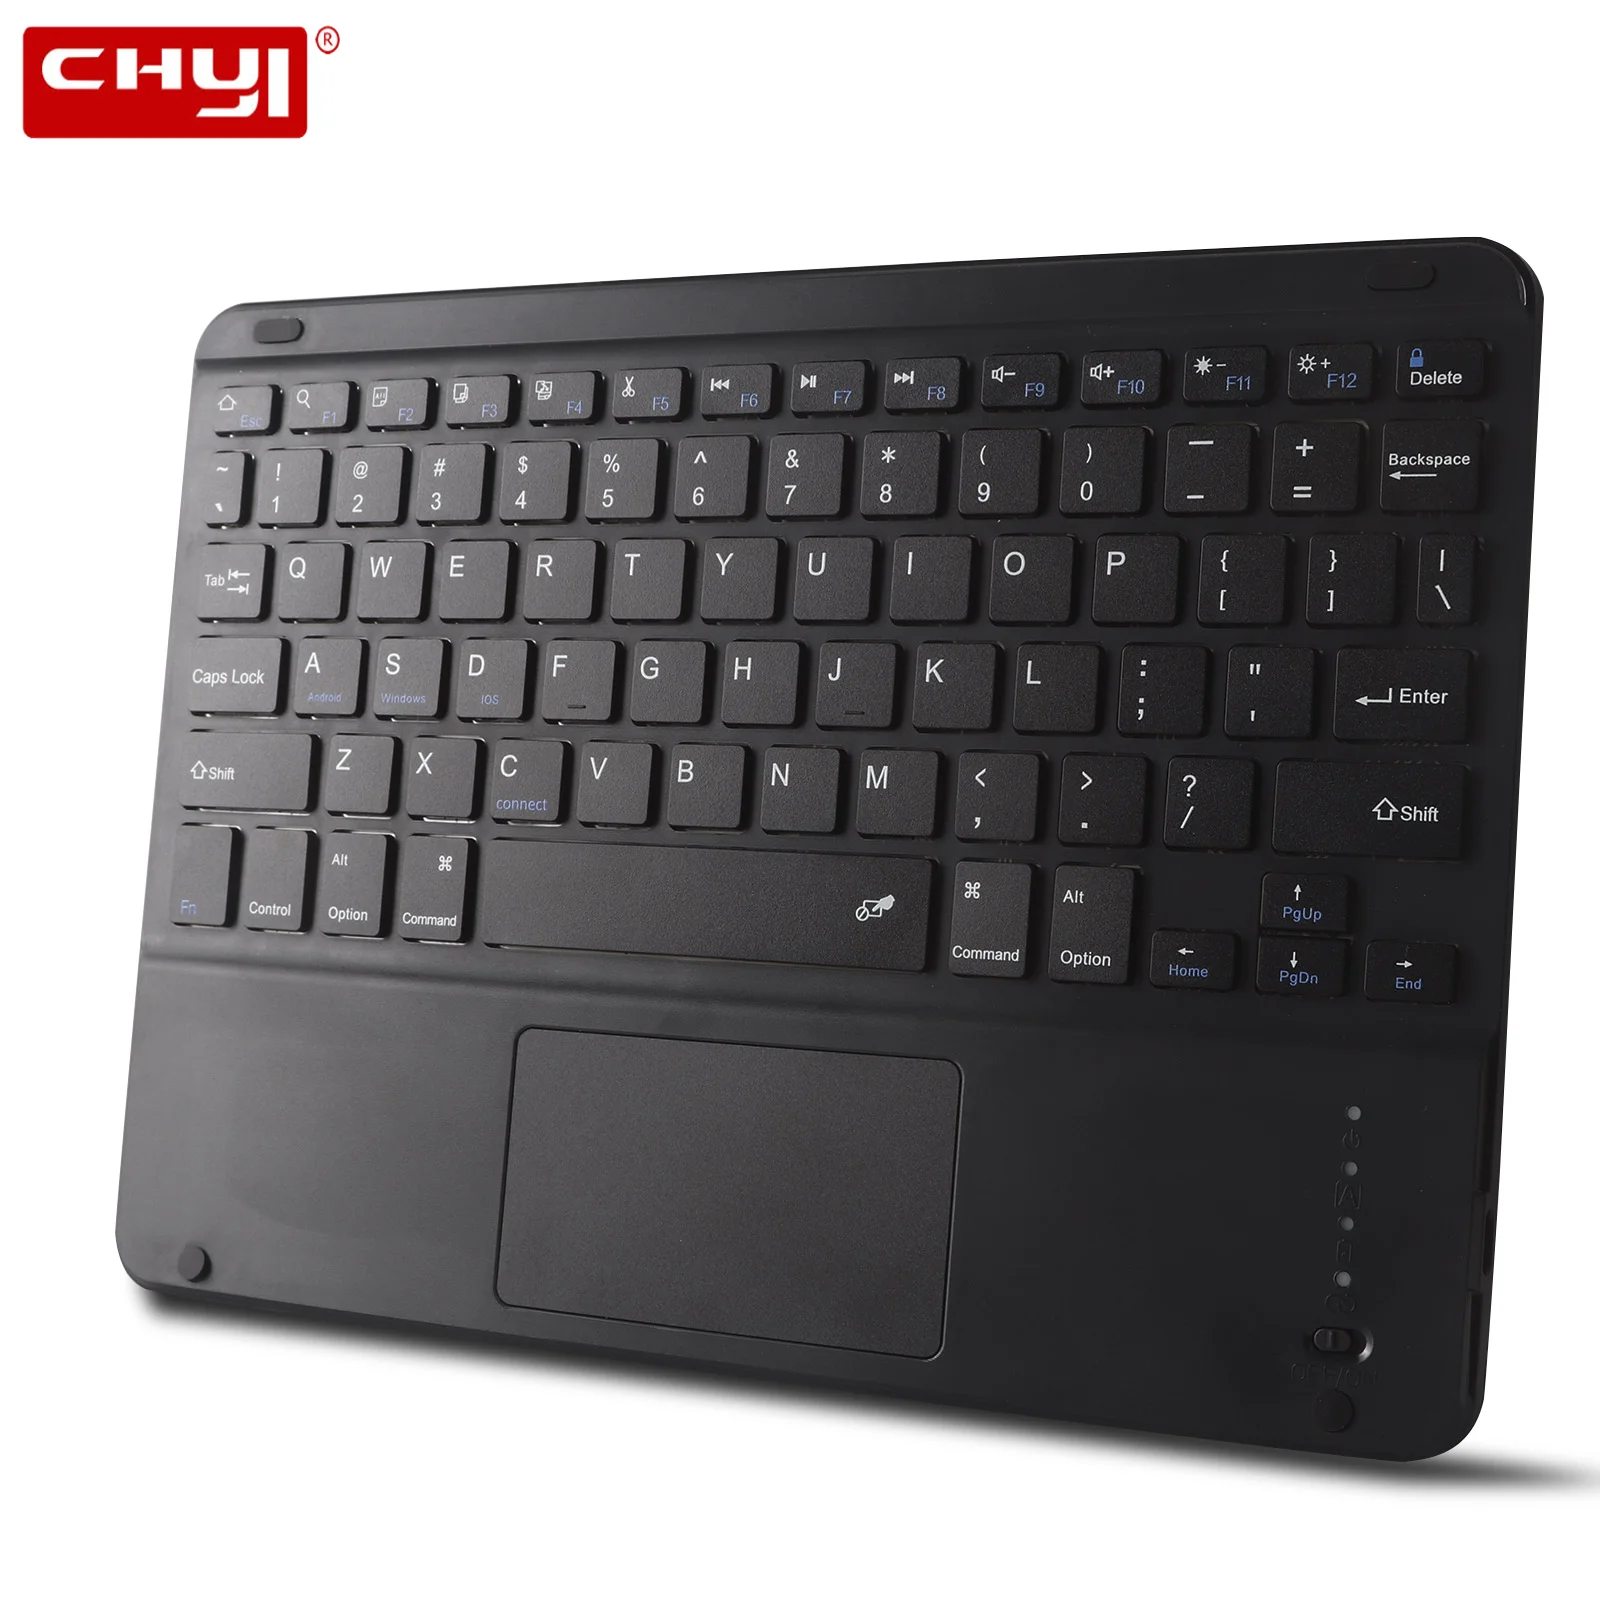 

CHYI Bluetooth Keyboard Office Ergonomic Design Wireless Keybord Ultra Slim Gaming Keypad with TouchPad For Mac Laptop Tablet